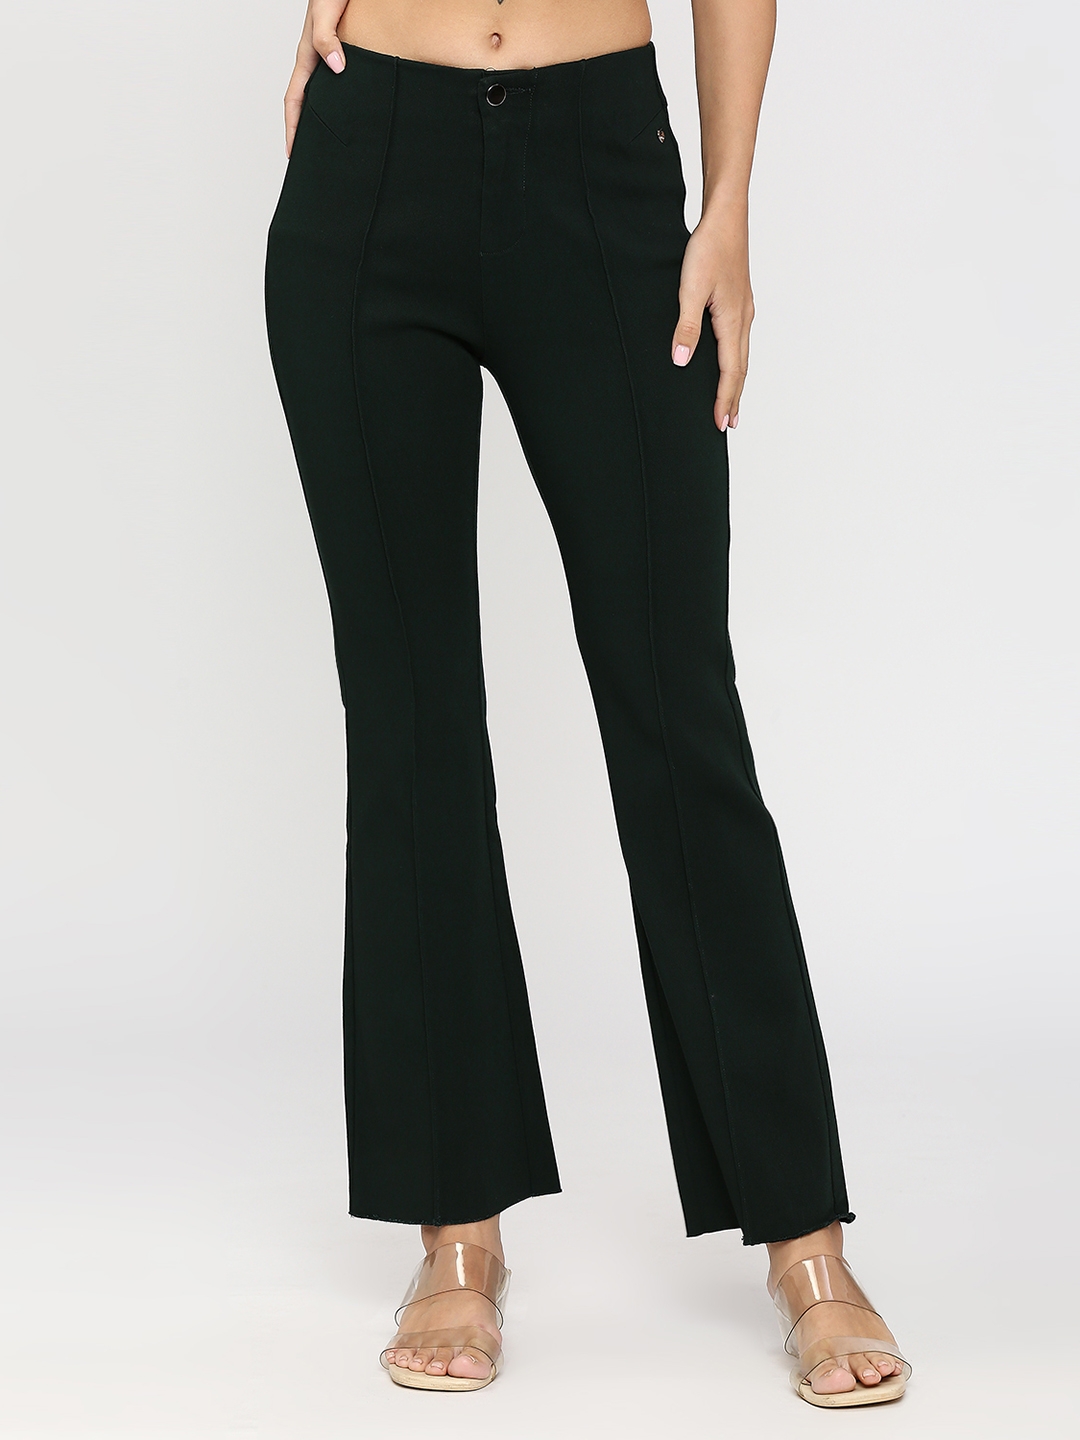 spykar | Spykar Women Dark Green Regular Fit Ankle Length Mid Rise Trousers 0